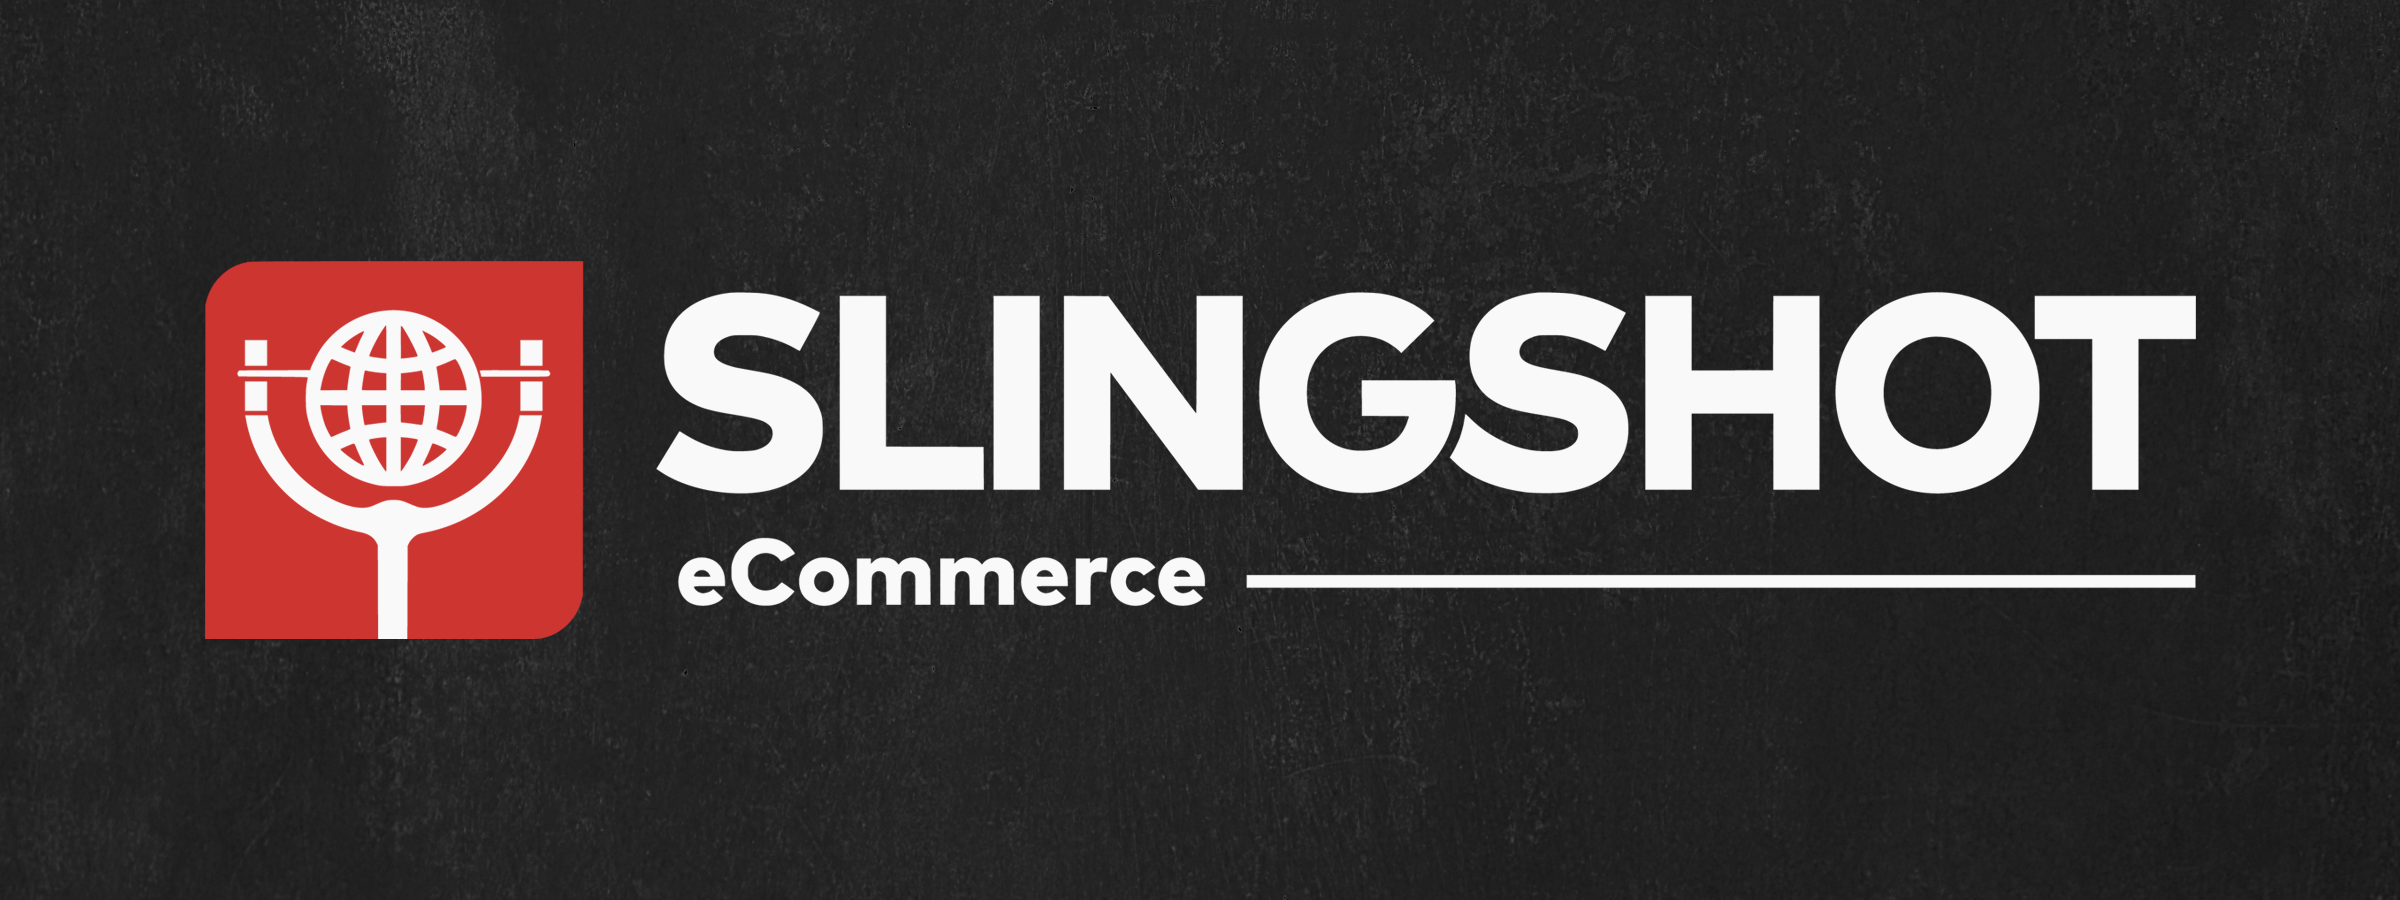 Slingshot eCommerce Logo